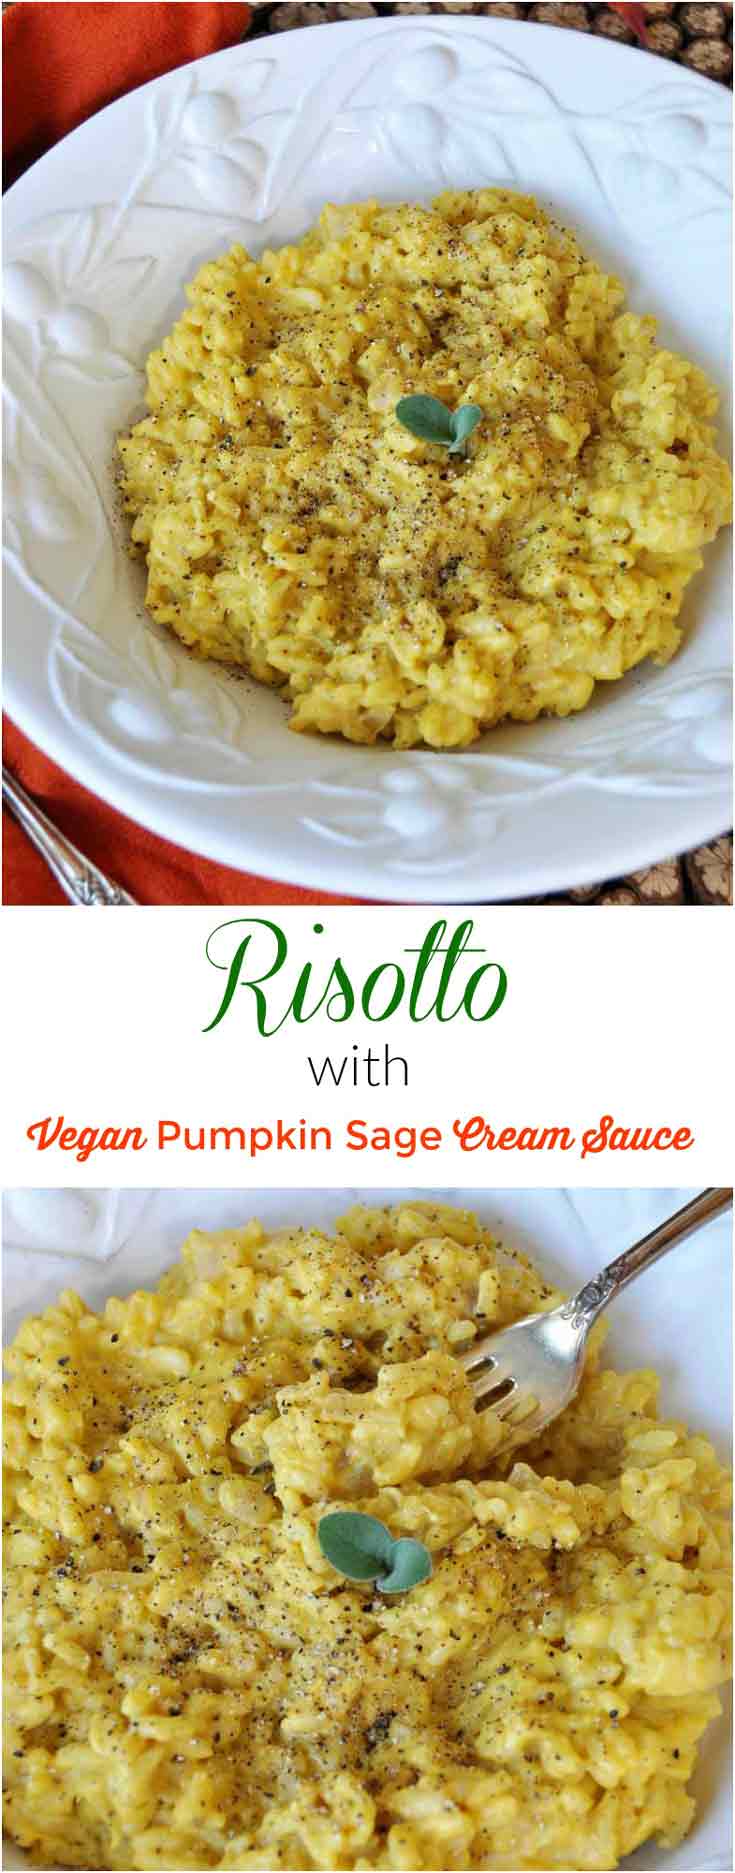 Creamy pumpkin sage cream sauce in chewy risotto. The ultimate comfort food recipe! www.veganosity.com